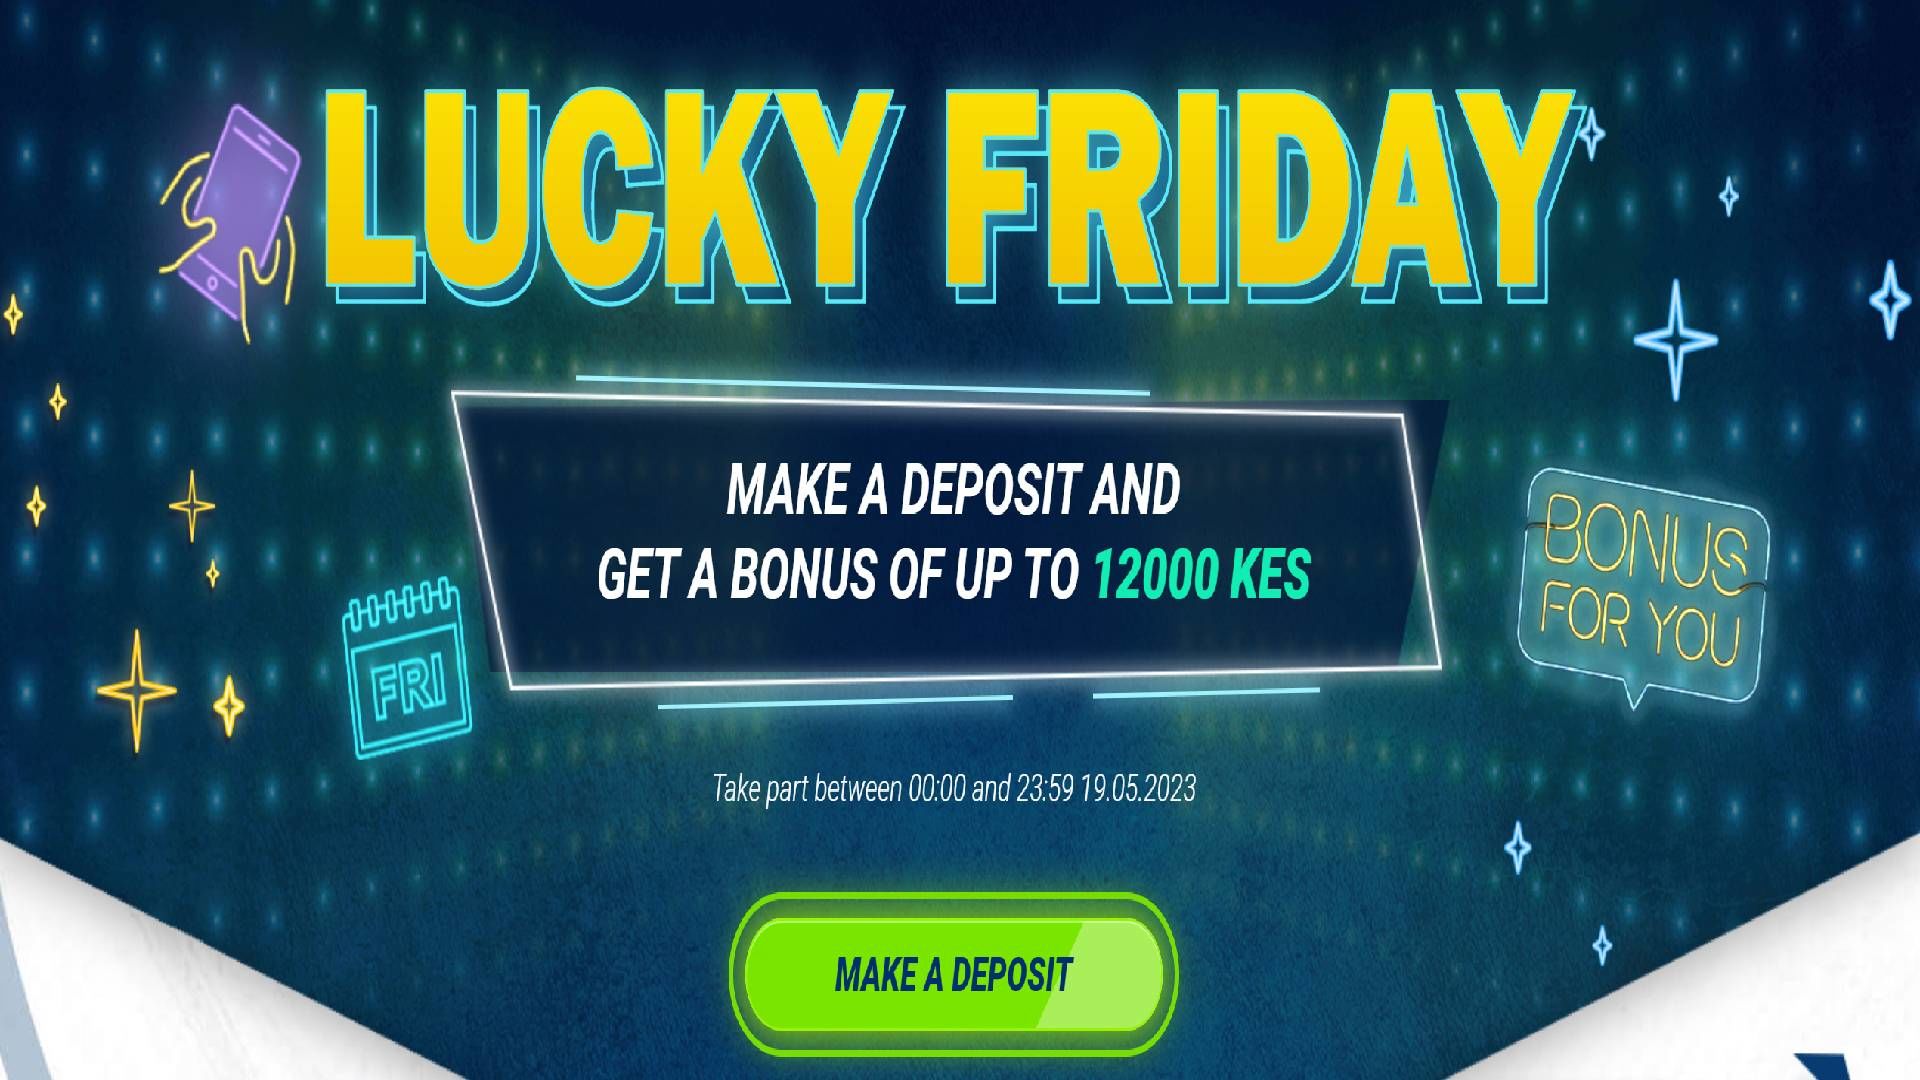 1xbet Lucky Friday Bonus